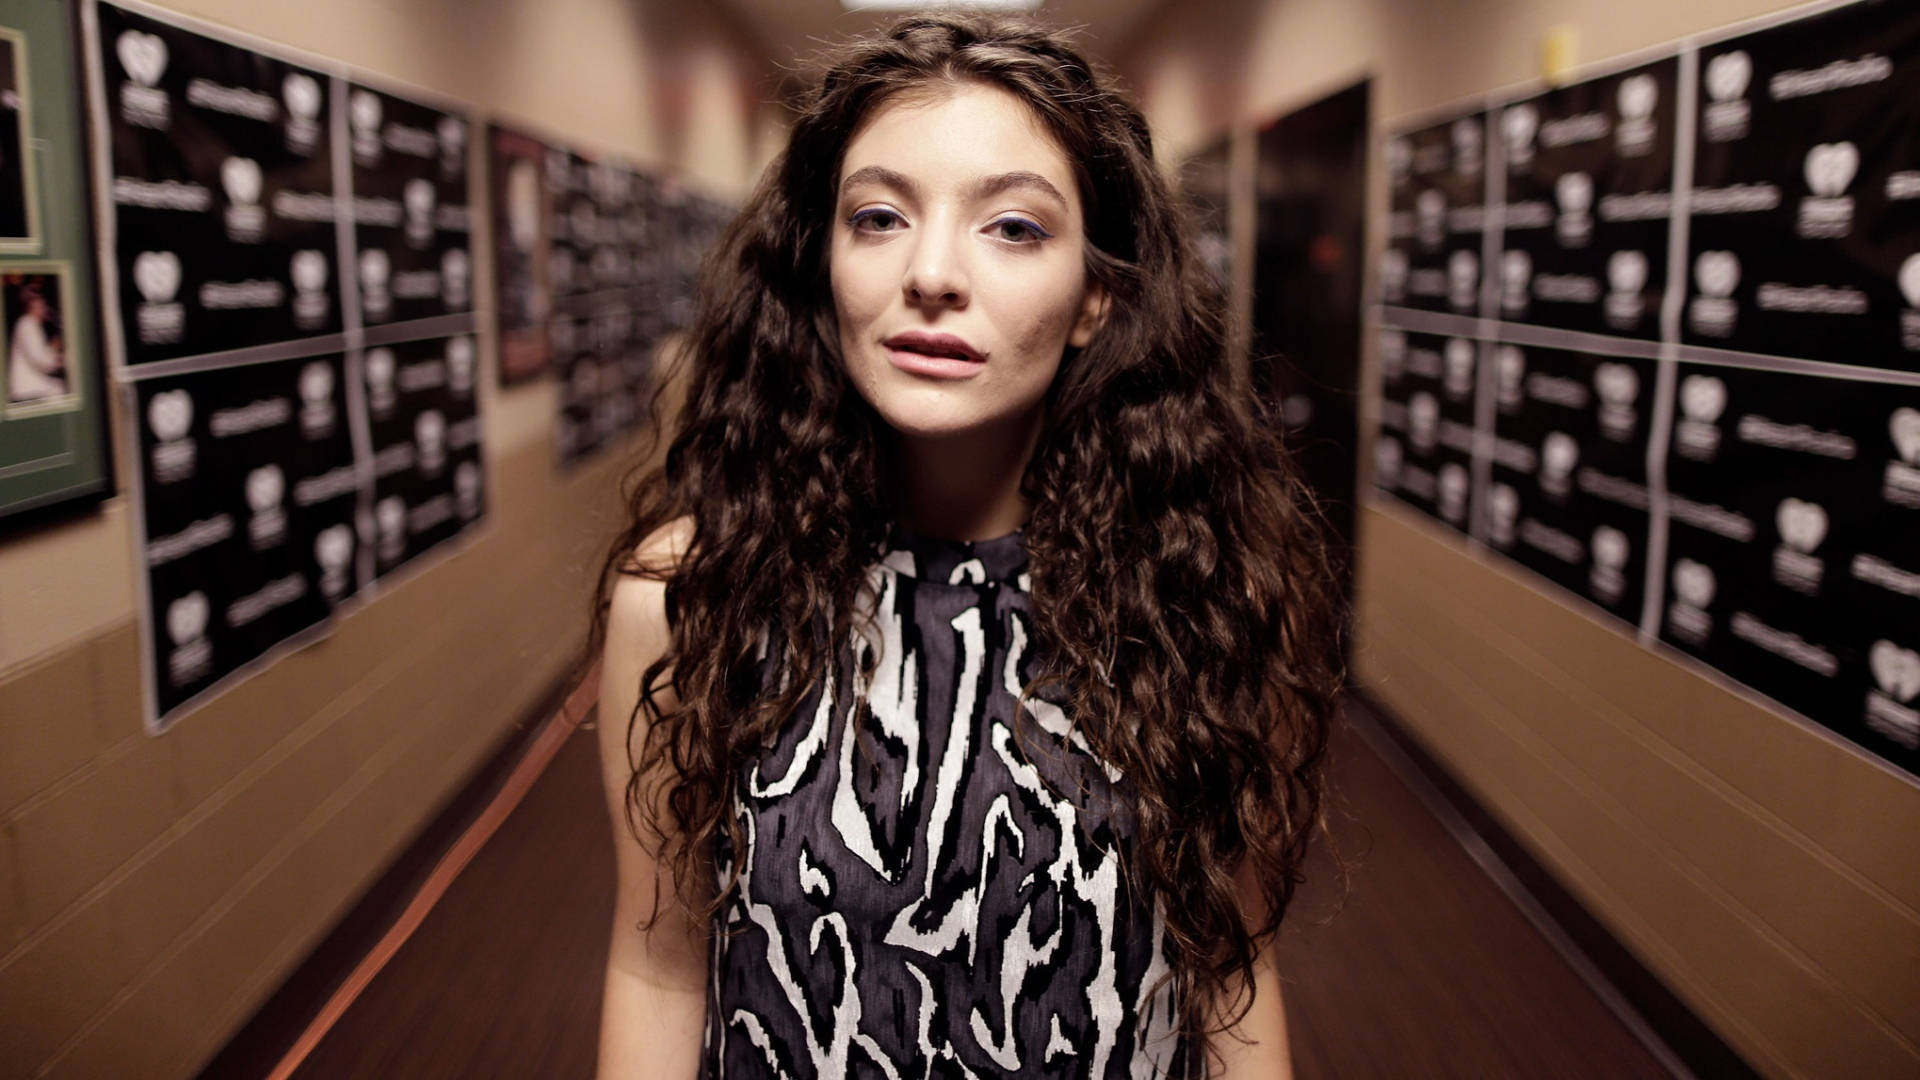 Singer Lorde In Hallway Background